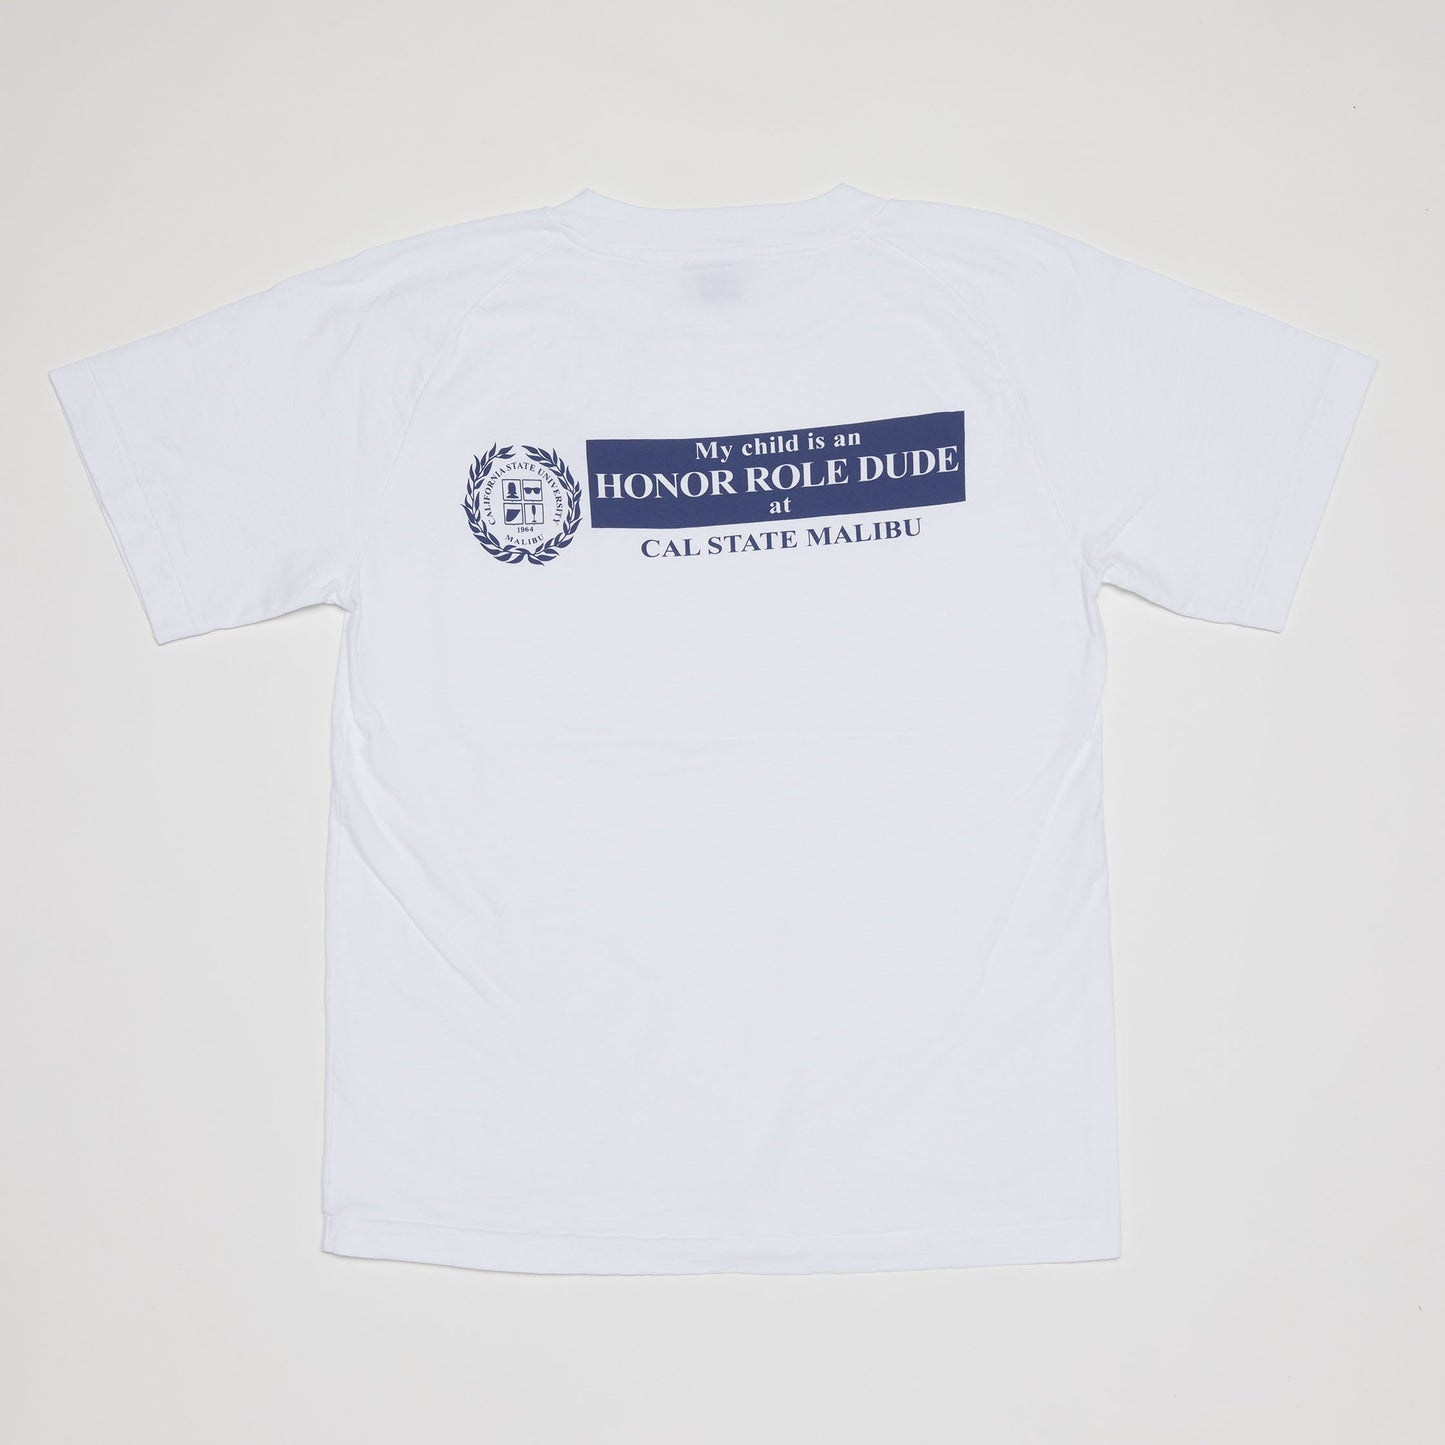 Cal State Malibu T-Shirt (White)